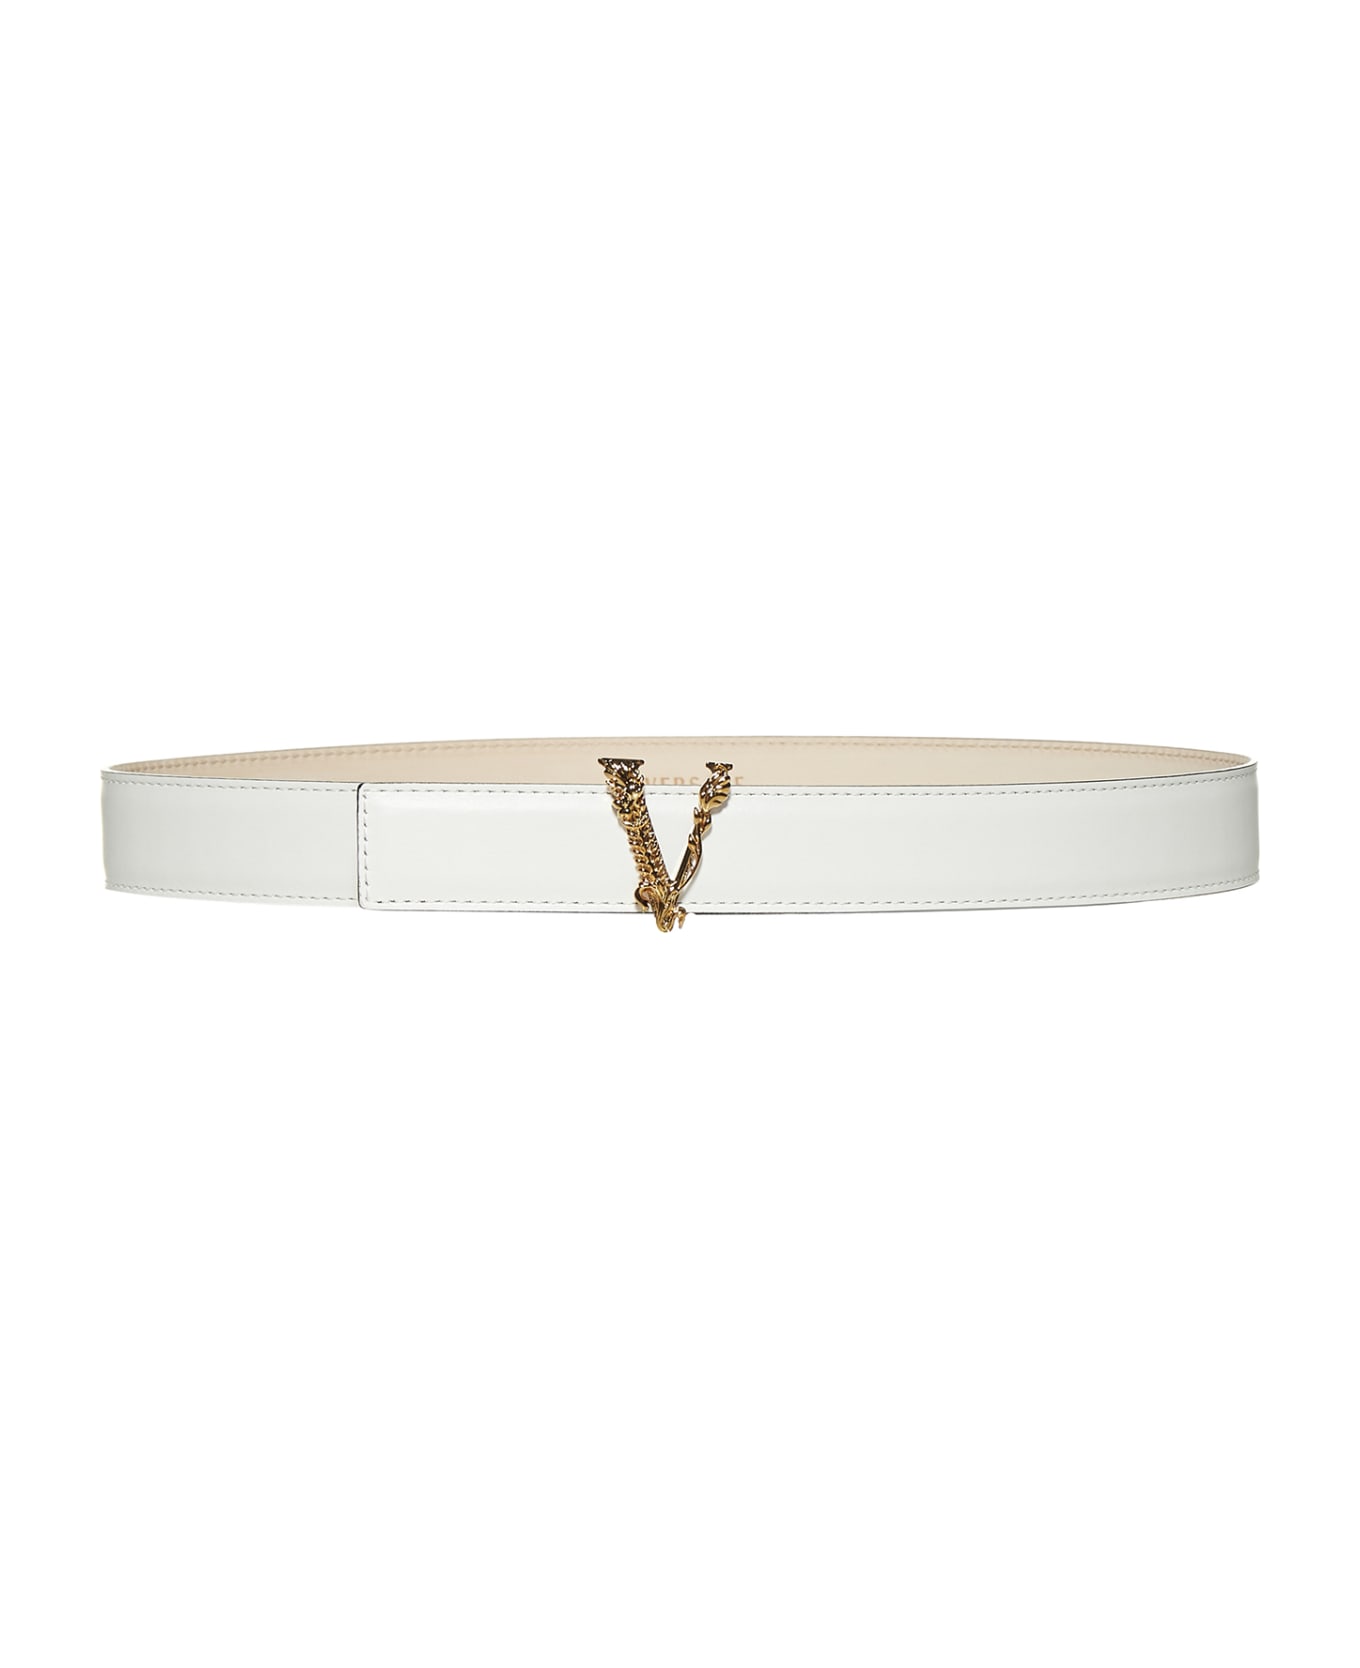 Versace Belt - Composition: ->calf Leather, 100